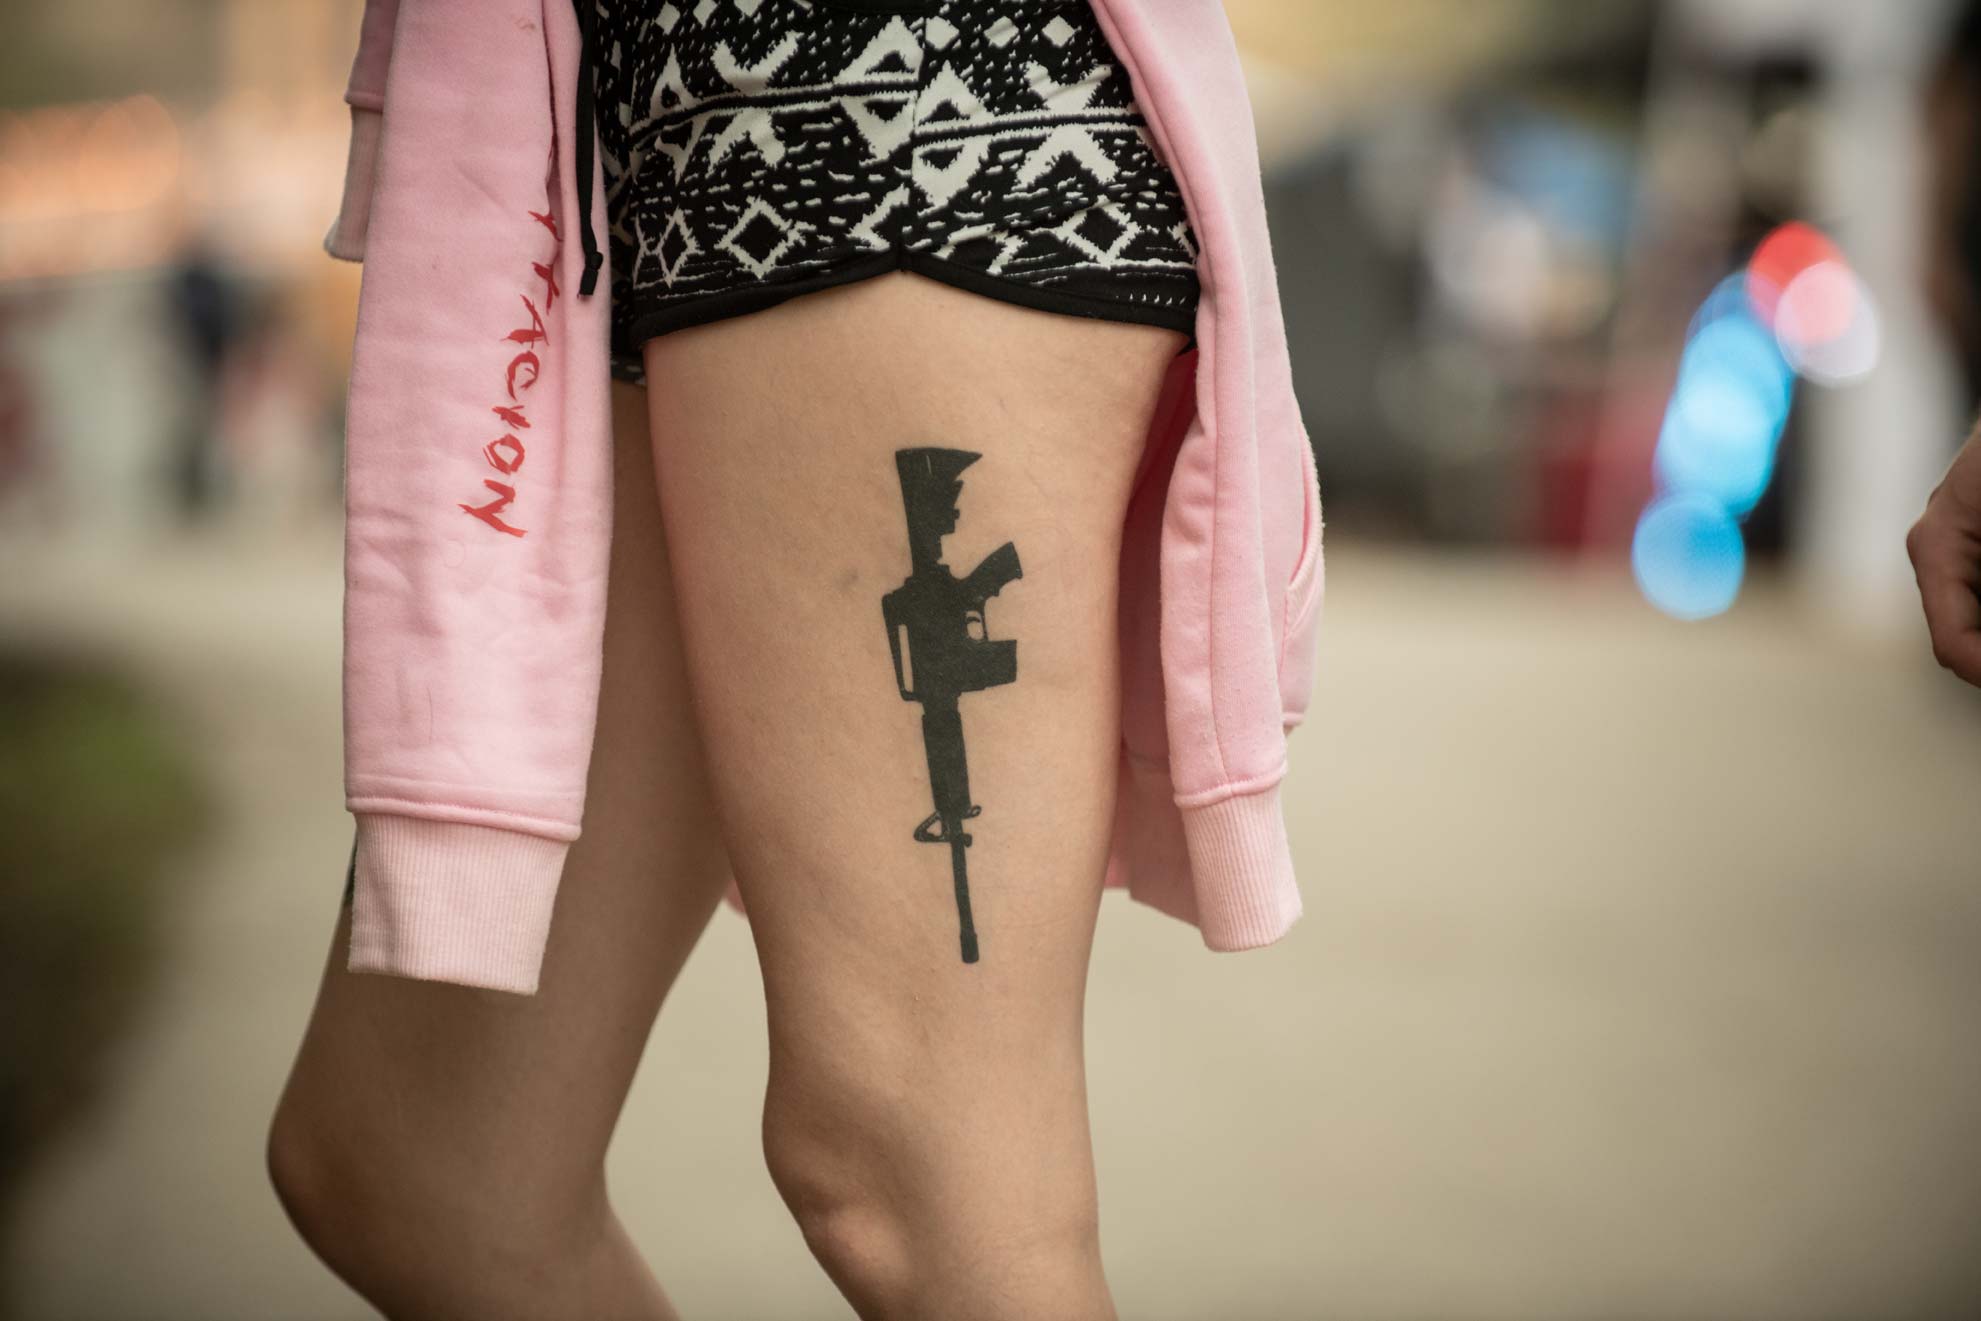 National Trailfest: An AR-15 rifle tattoo on a woman